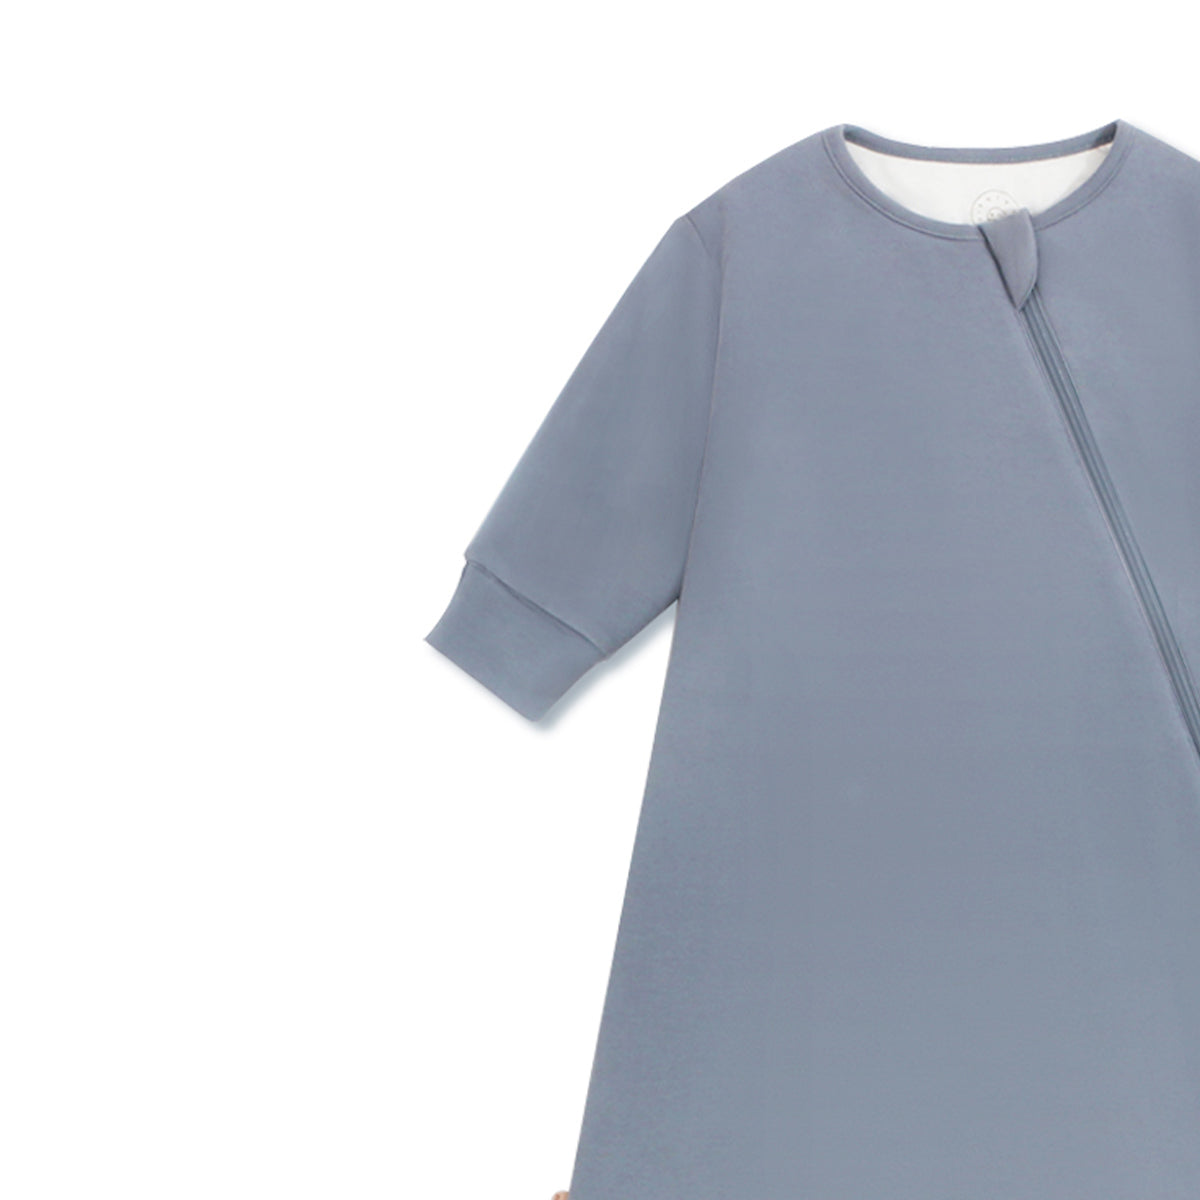 Zip Sleep Sack With Sleeves 2.5 TOG - Dark Night Blue - Custom Embroidery